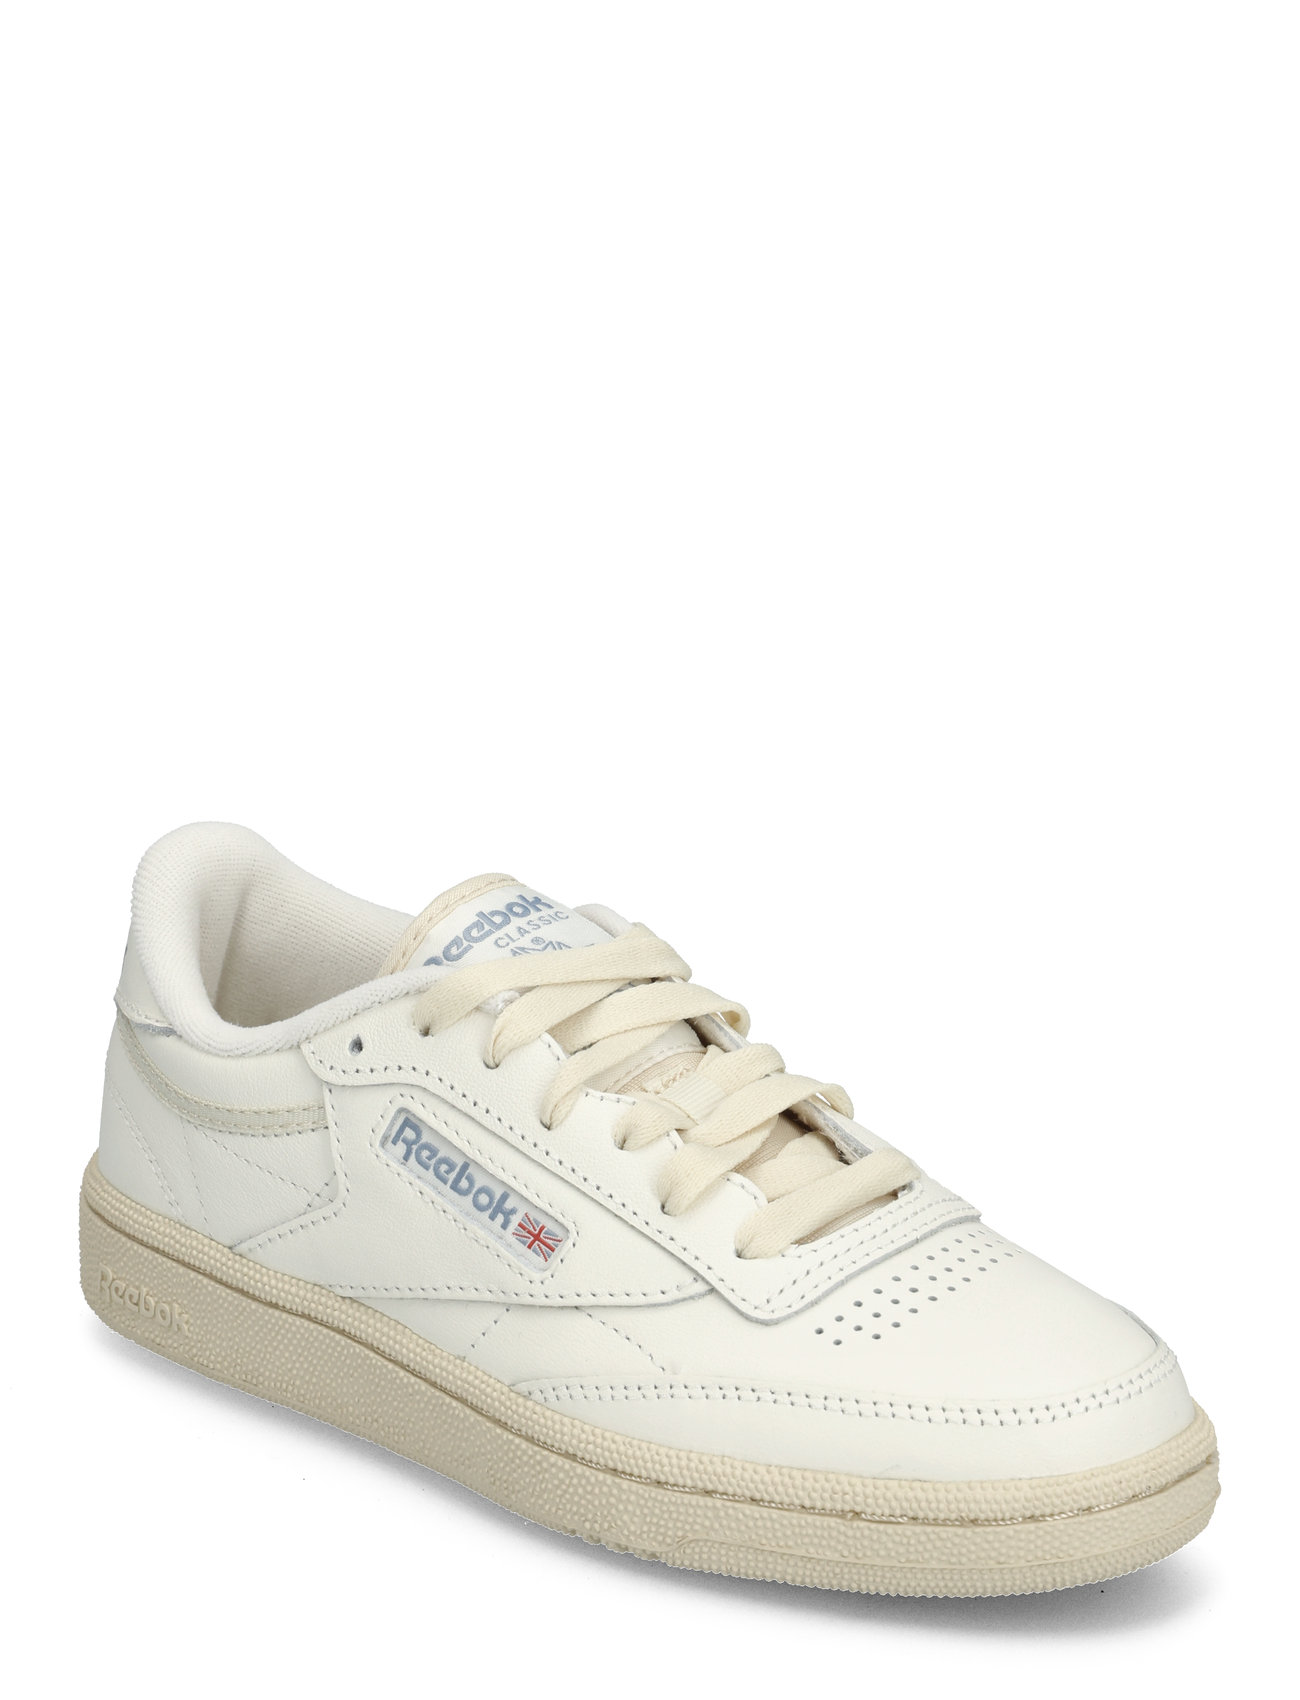 Club C 85 Sport Sneakers Low-top Sneakers White Reebok Classics